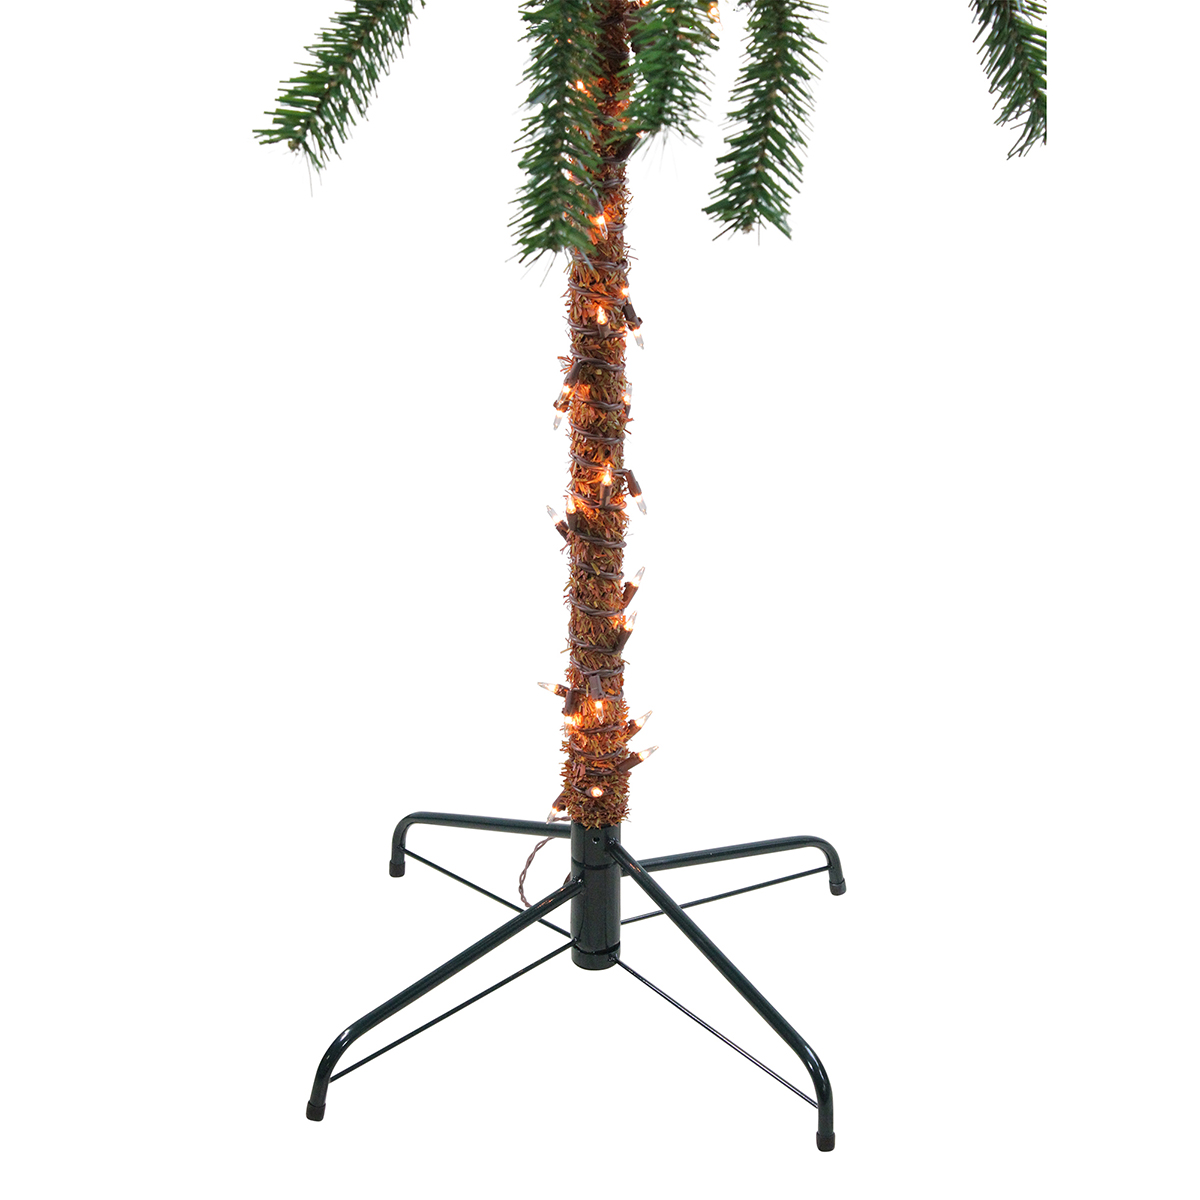 Northlight Seasonal 4ft. Pre-Lit Artificial Tropical Palm Tree